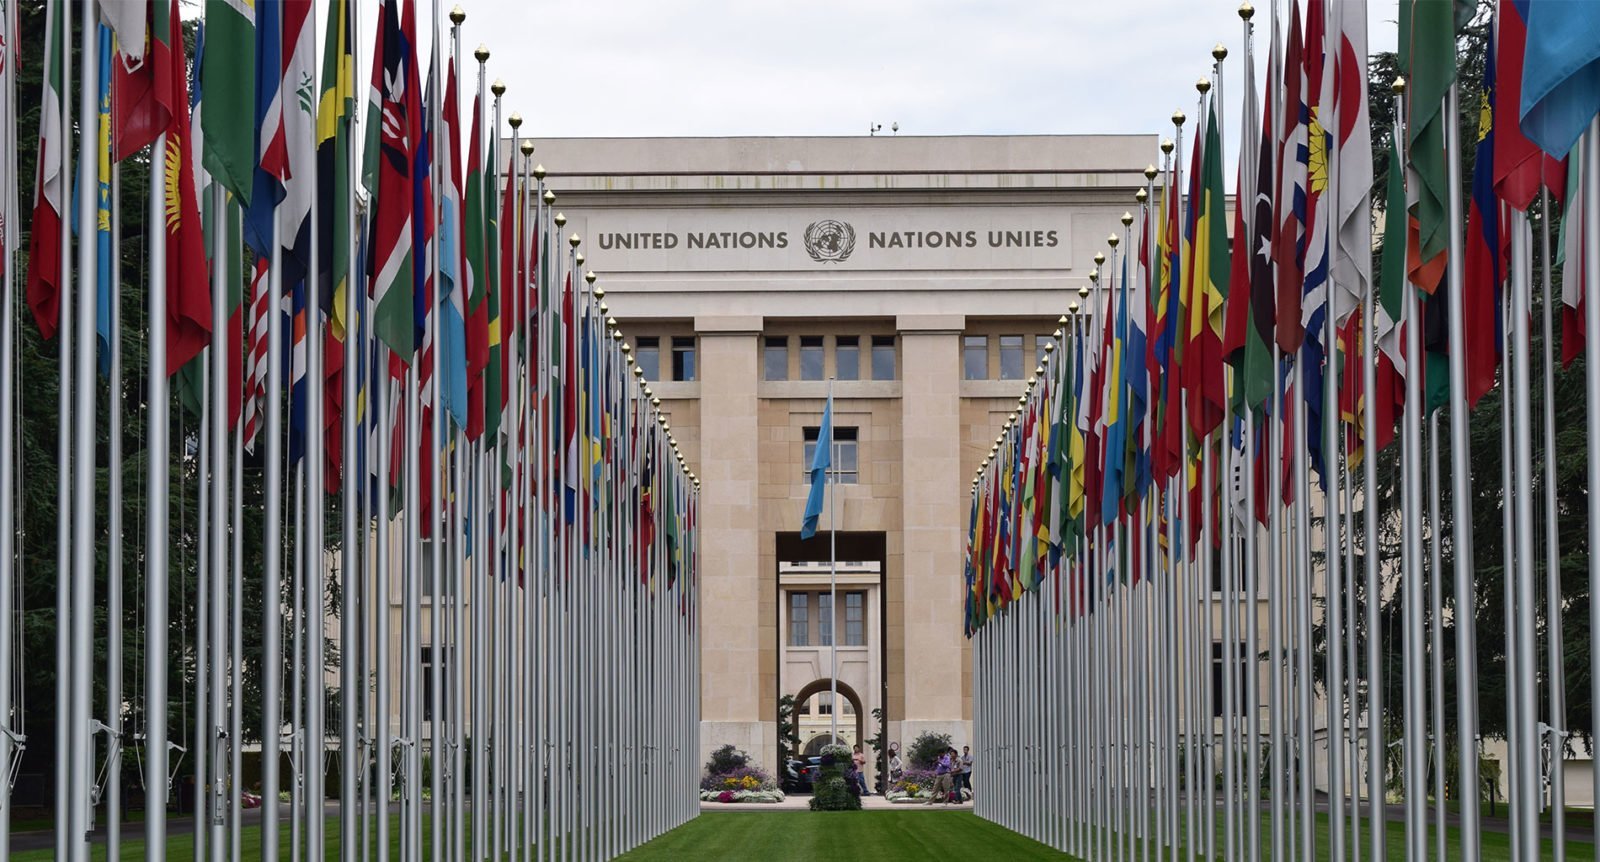 The United Nations headquarters in Geneva. © iStock/MarkB1985